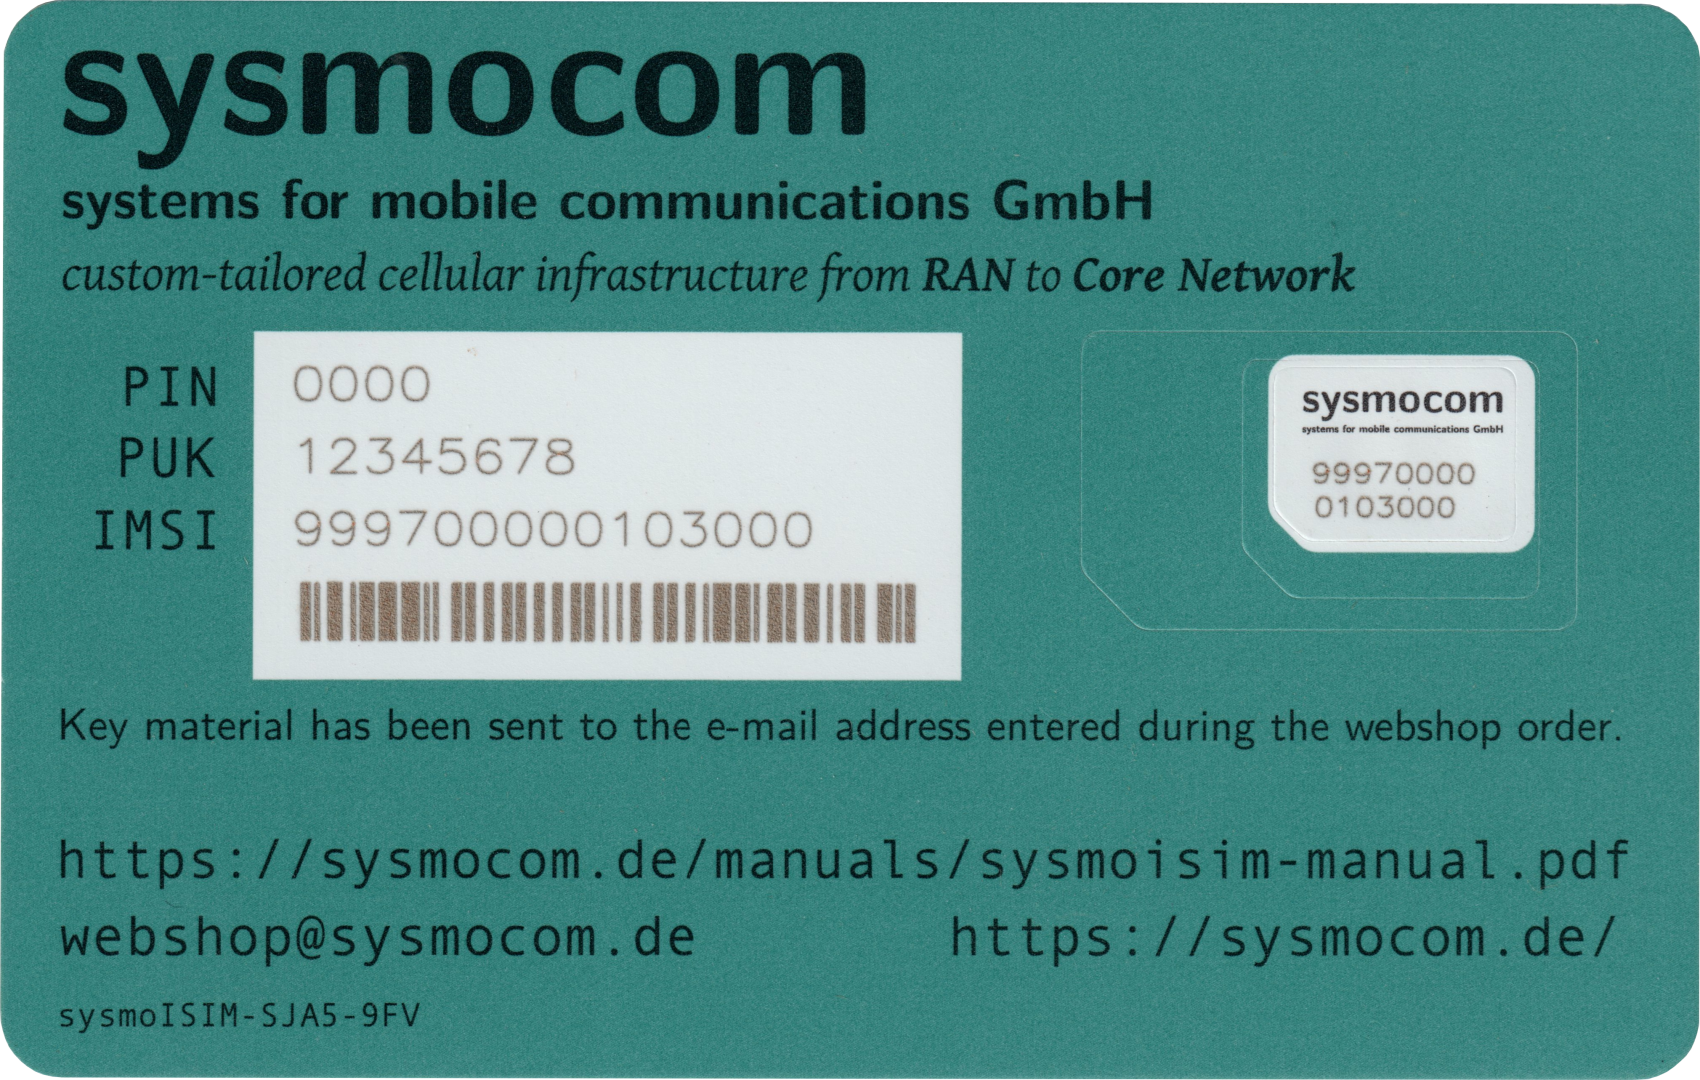 sysmoISIM-SJA5 SIM + USIM + ISIM Card (10-pack) with ADM keys